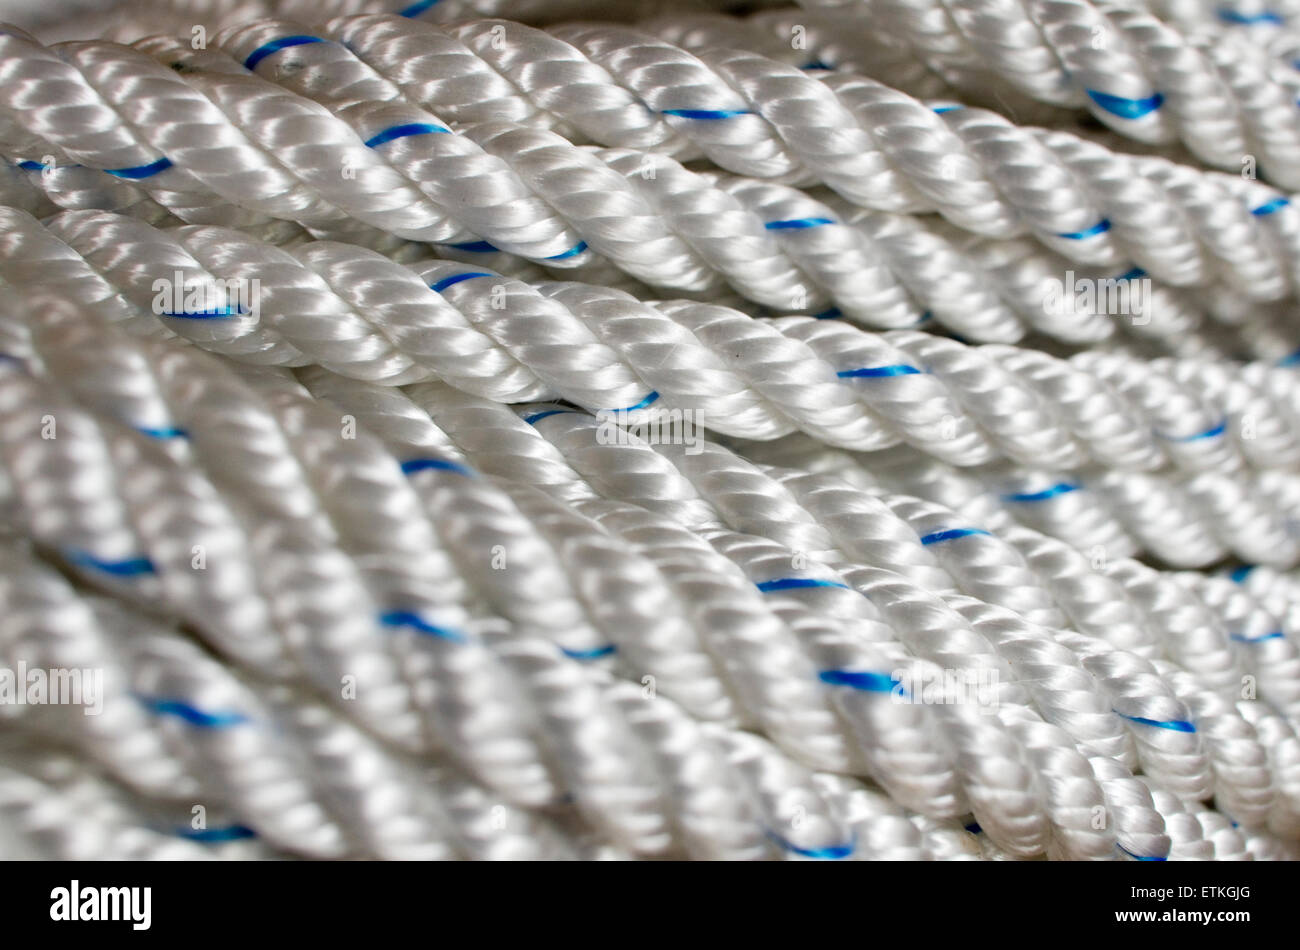 https://c8.alamy.com/comp/ETKGJG/close-up-shot-of-polyester-rope-typically-used-for-marine-purposes-ETKGJG.jpg